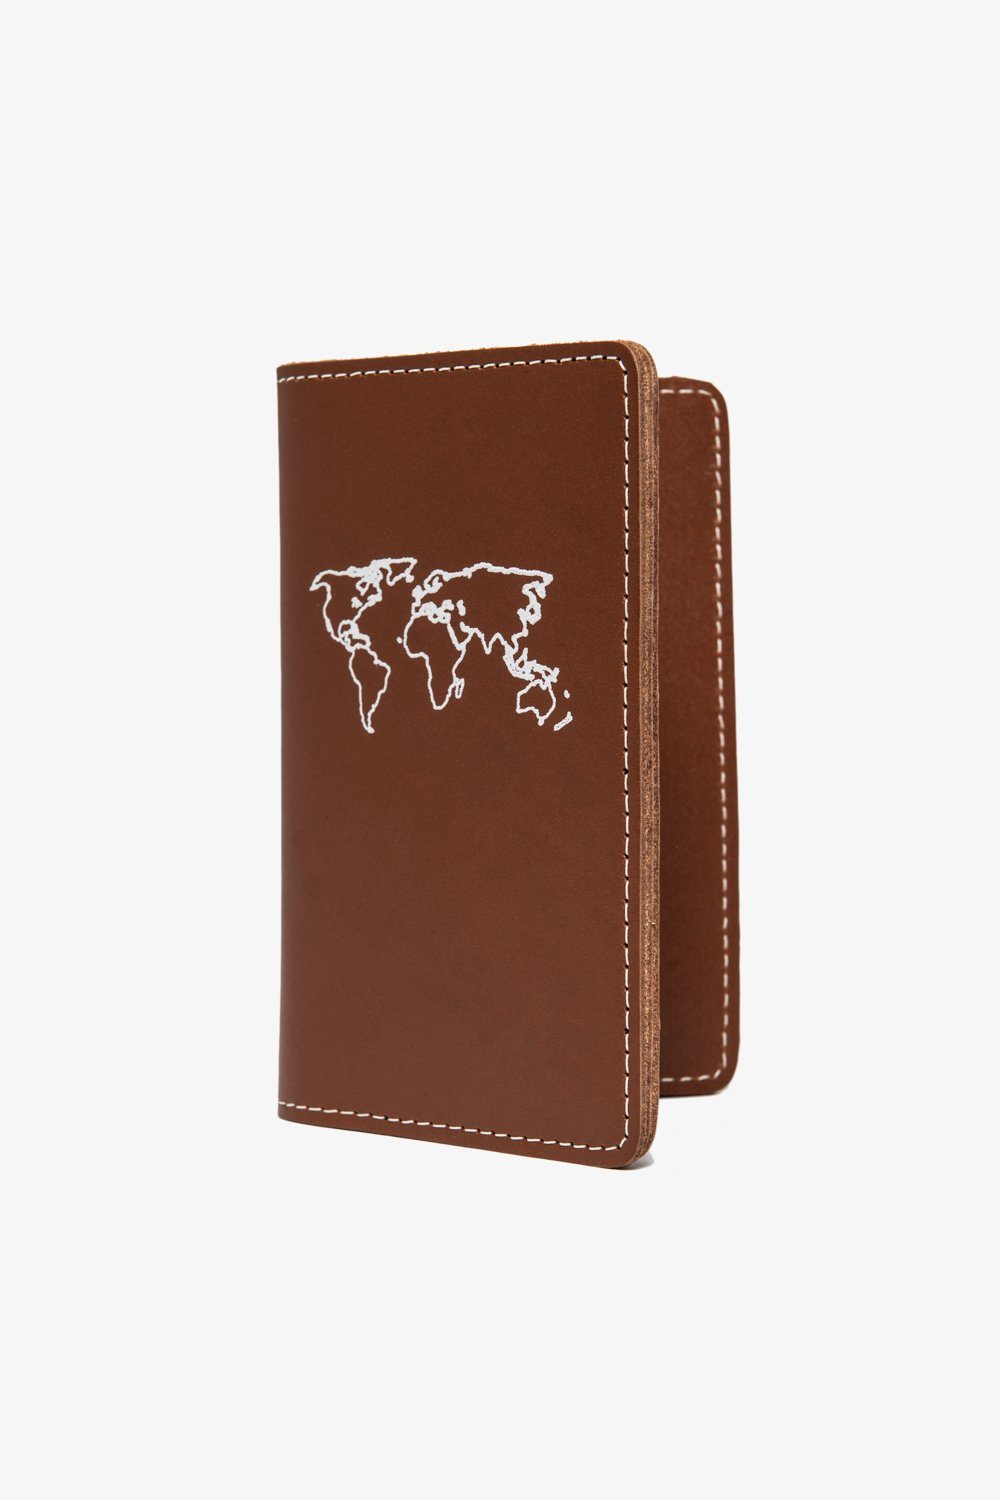 Leather Passport Wallet - Brown Accessories Jack + Mulligan 